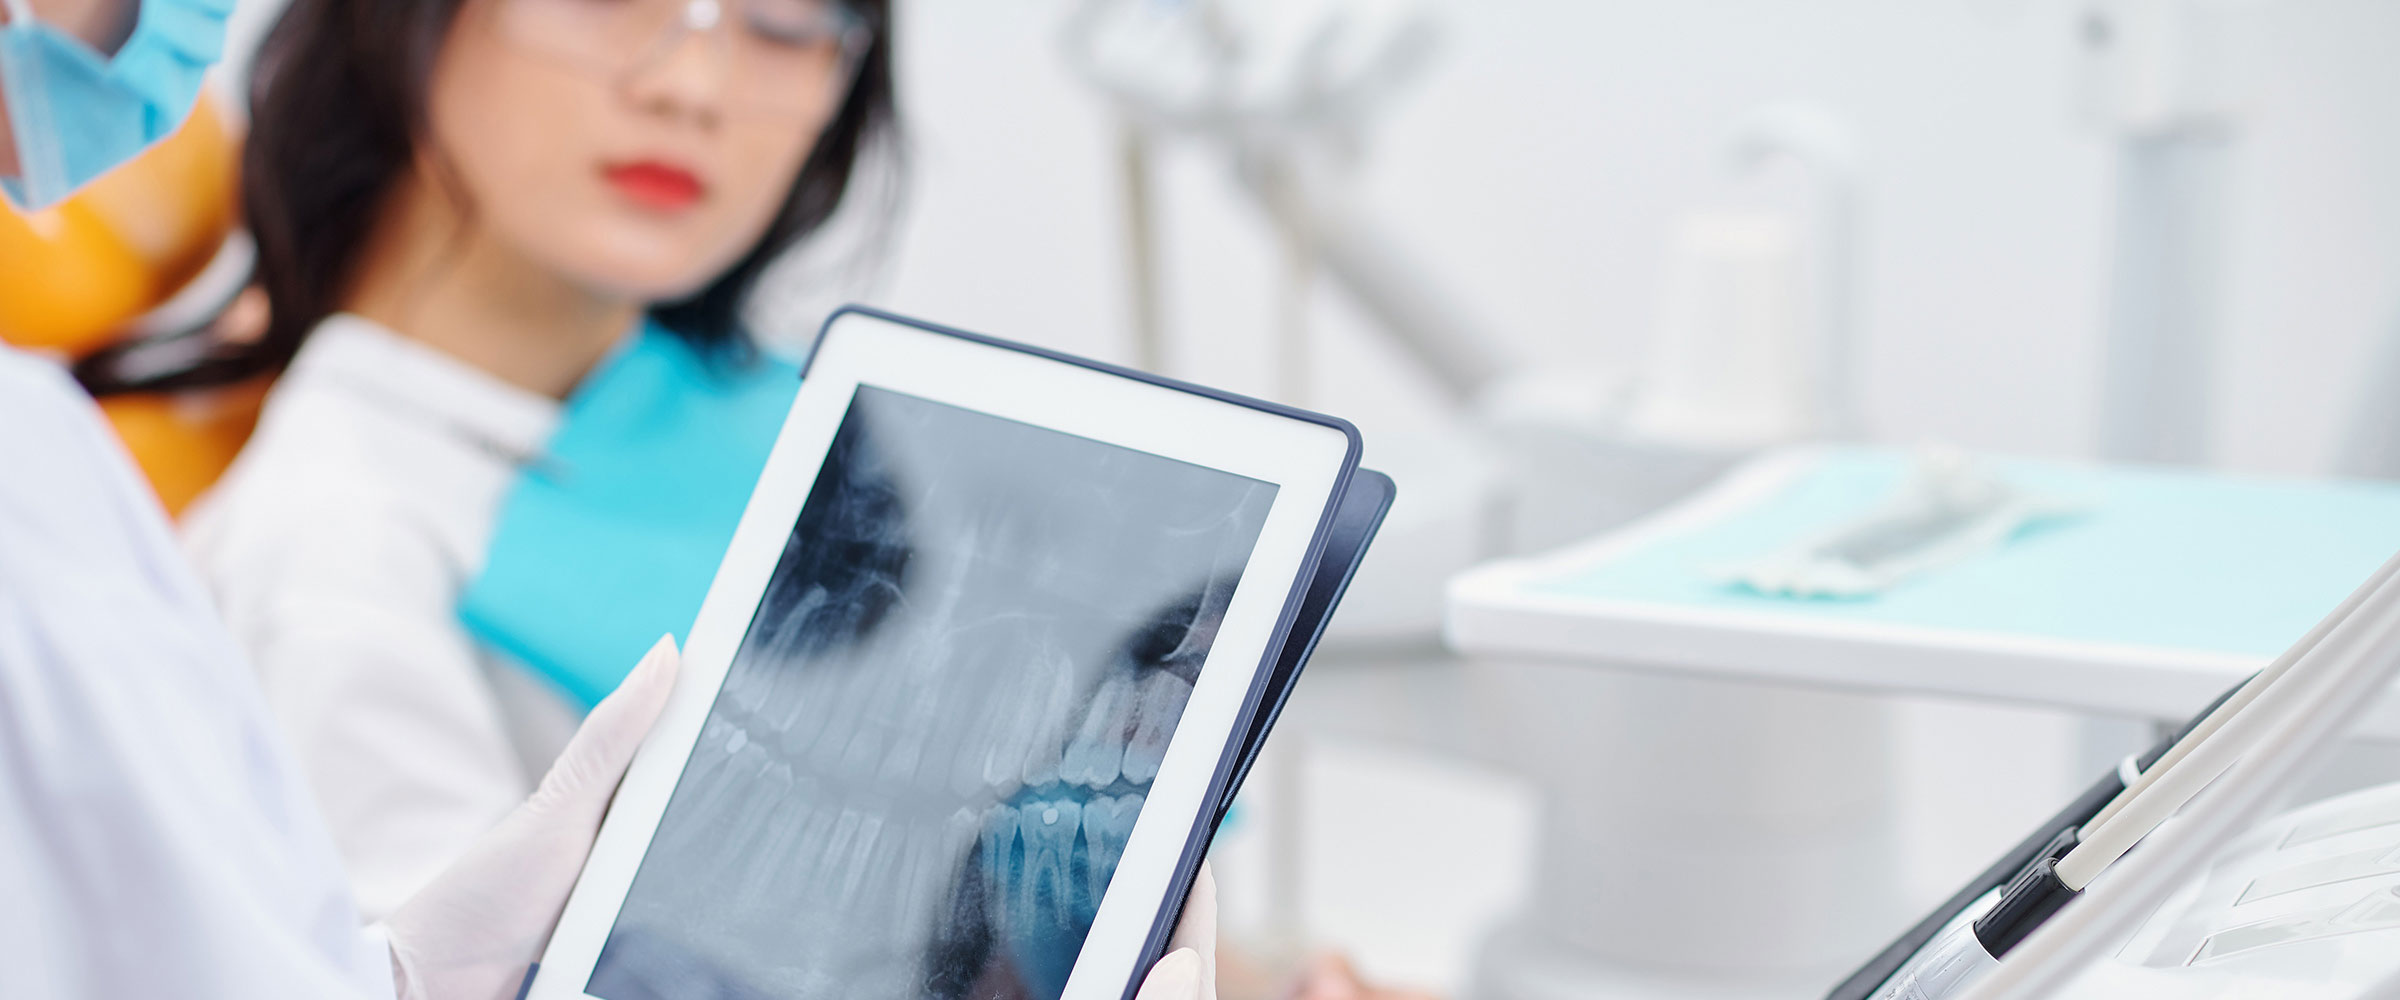 Bringing you quality dental care through
digital technology